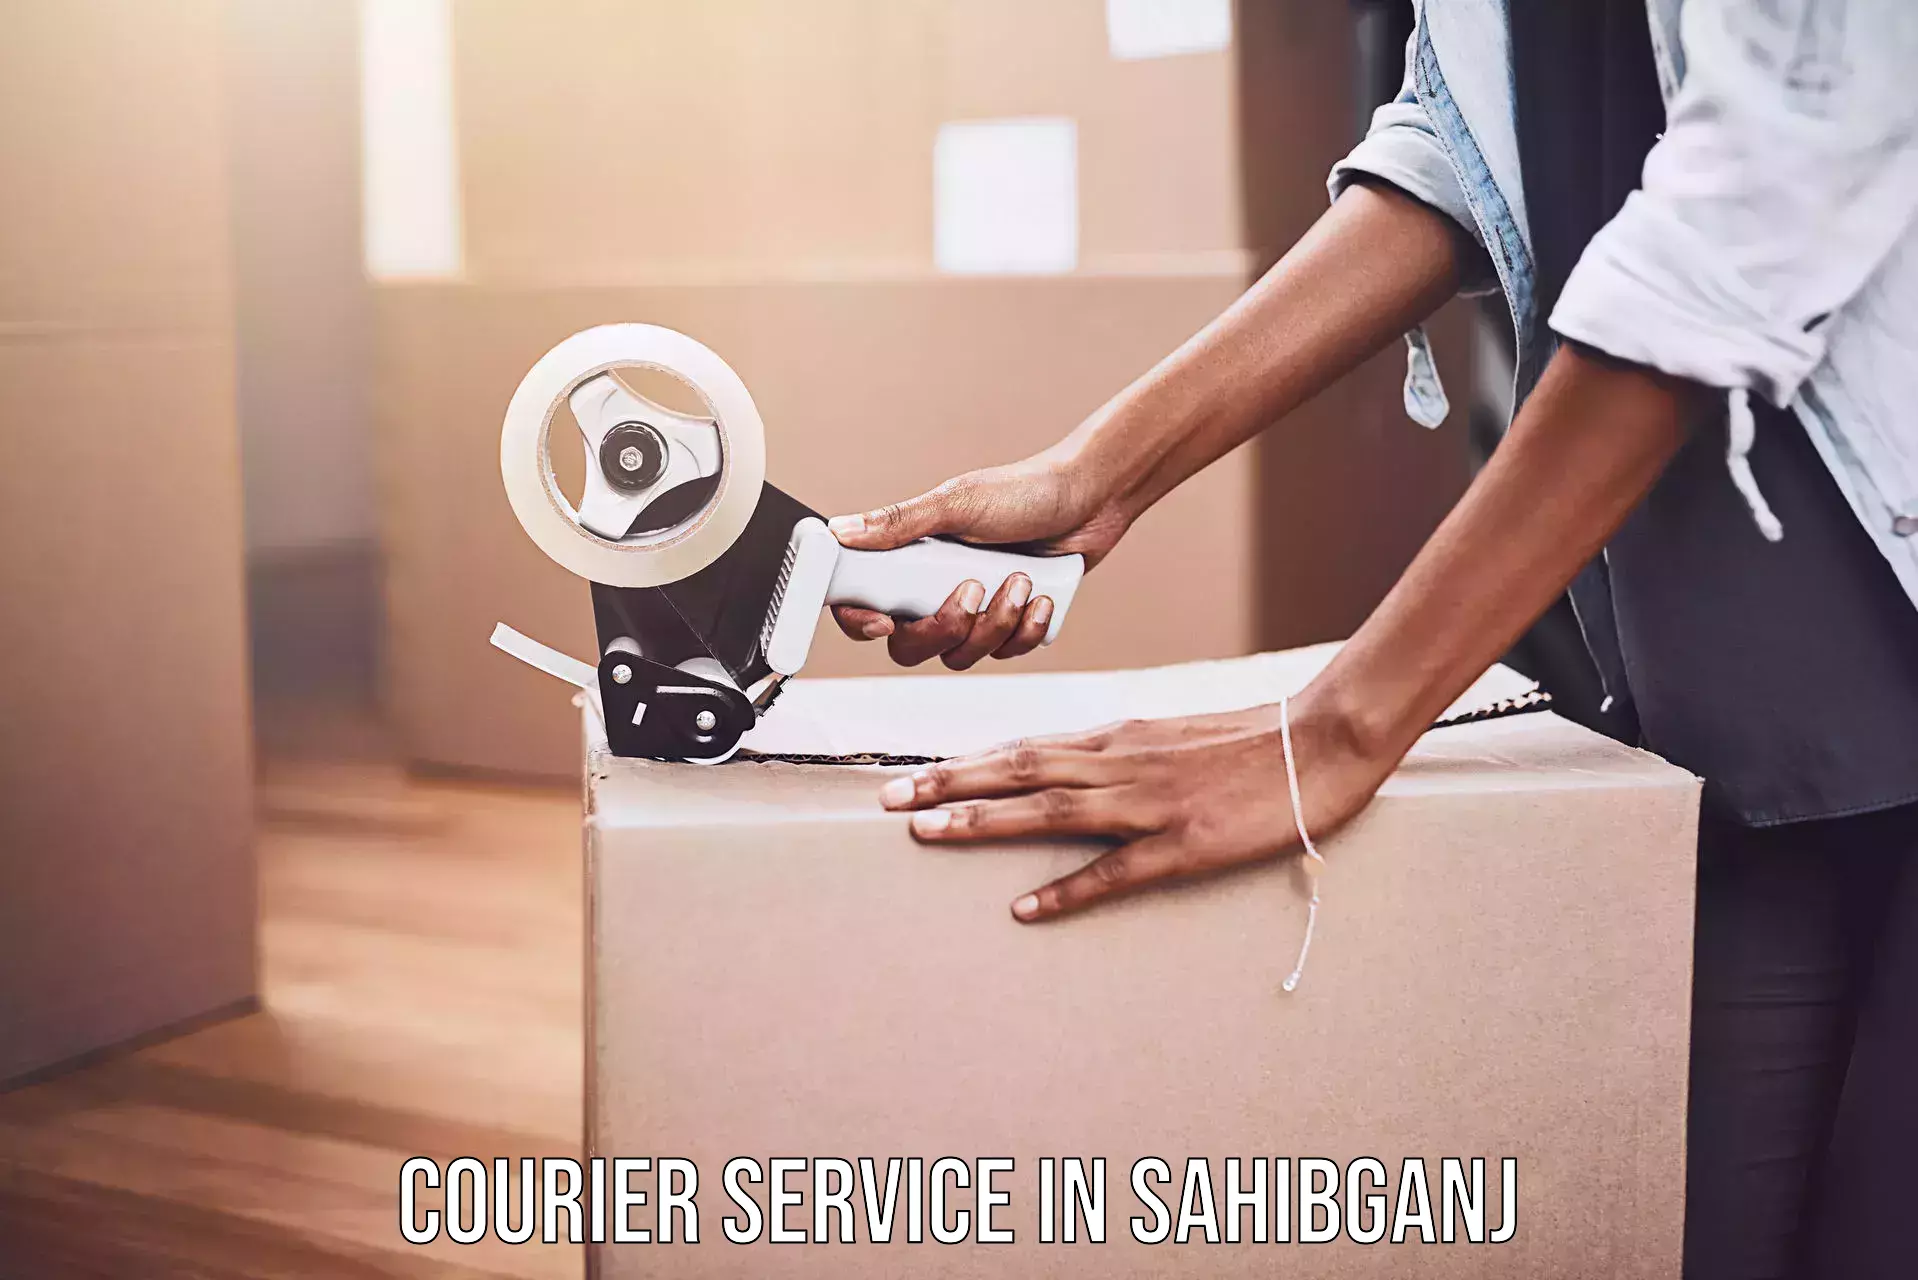 Courier service efficiency in Sahibganj